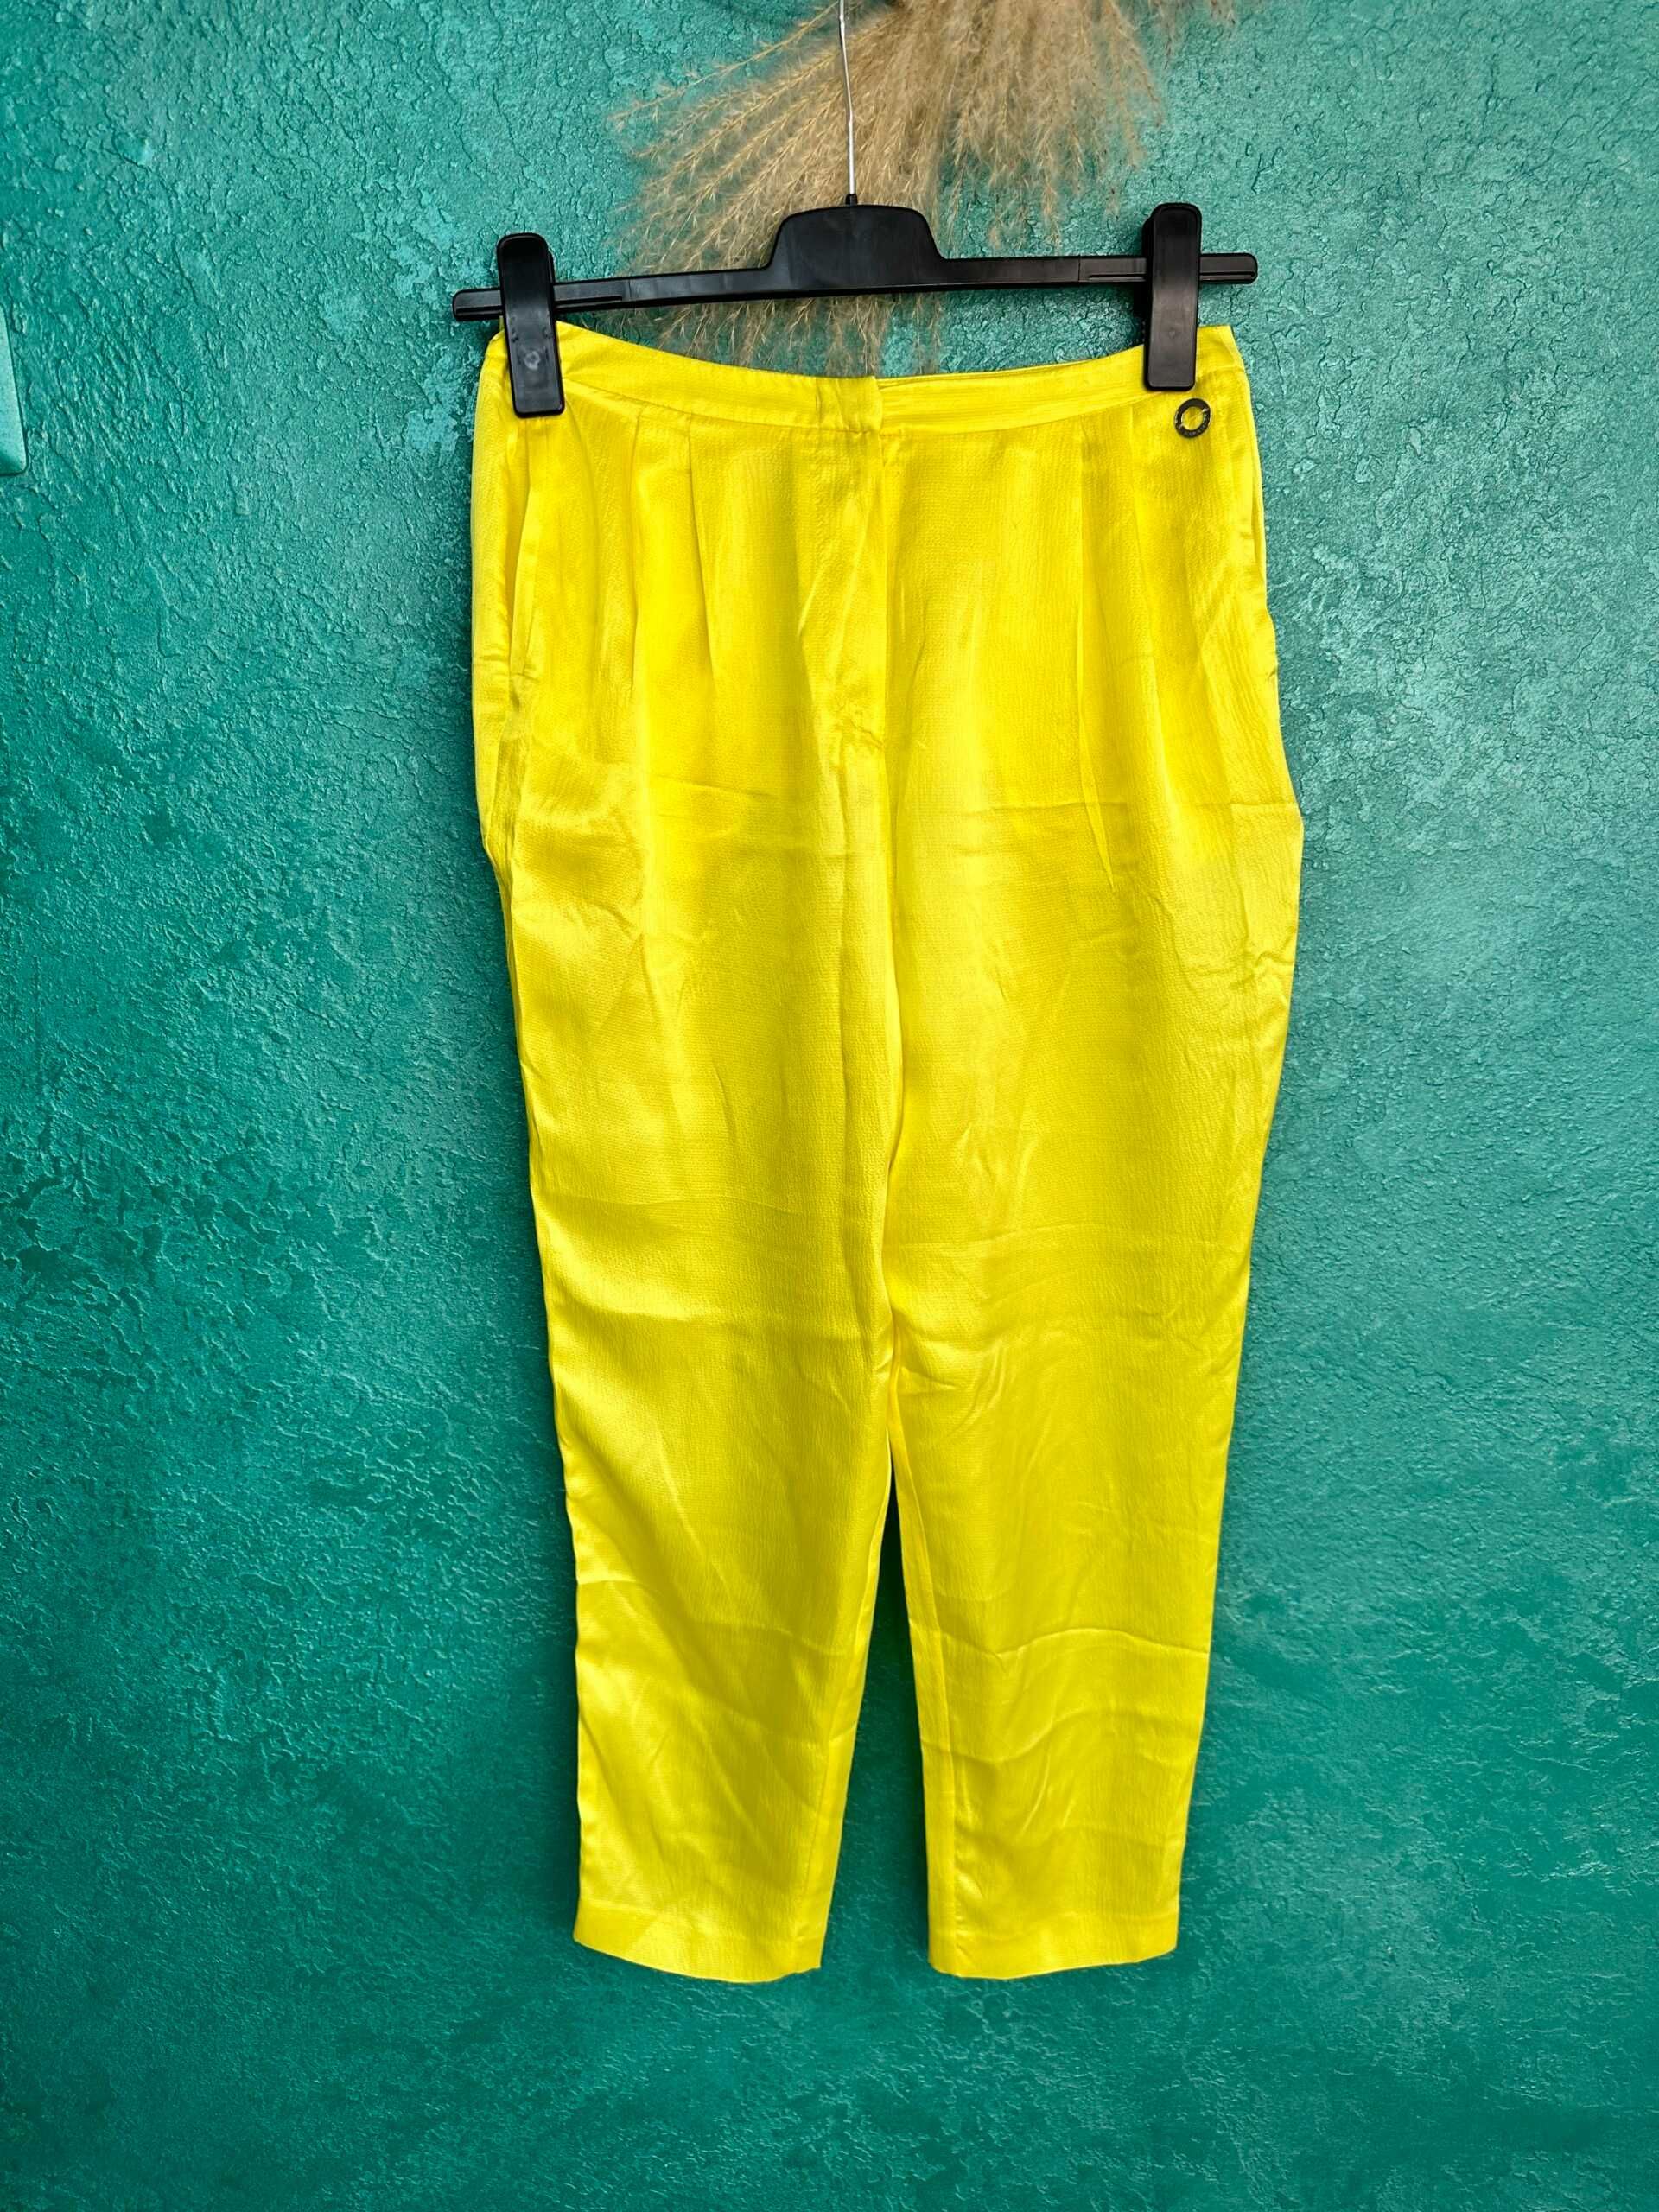 Pantaloni din mătase ICEBERG, originali, mărimea S-M